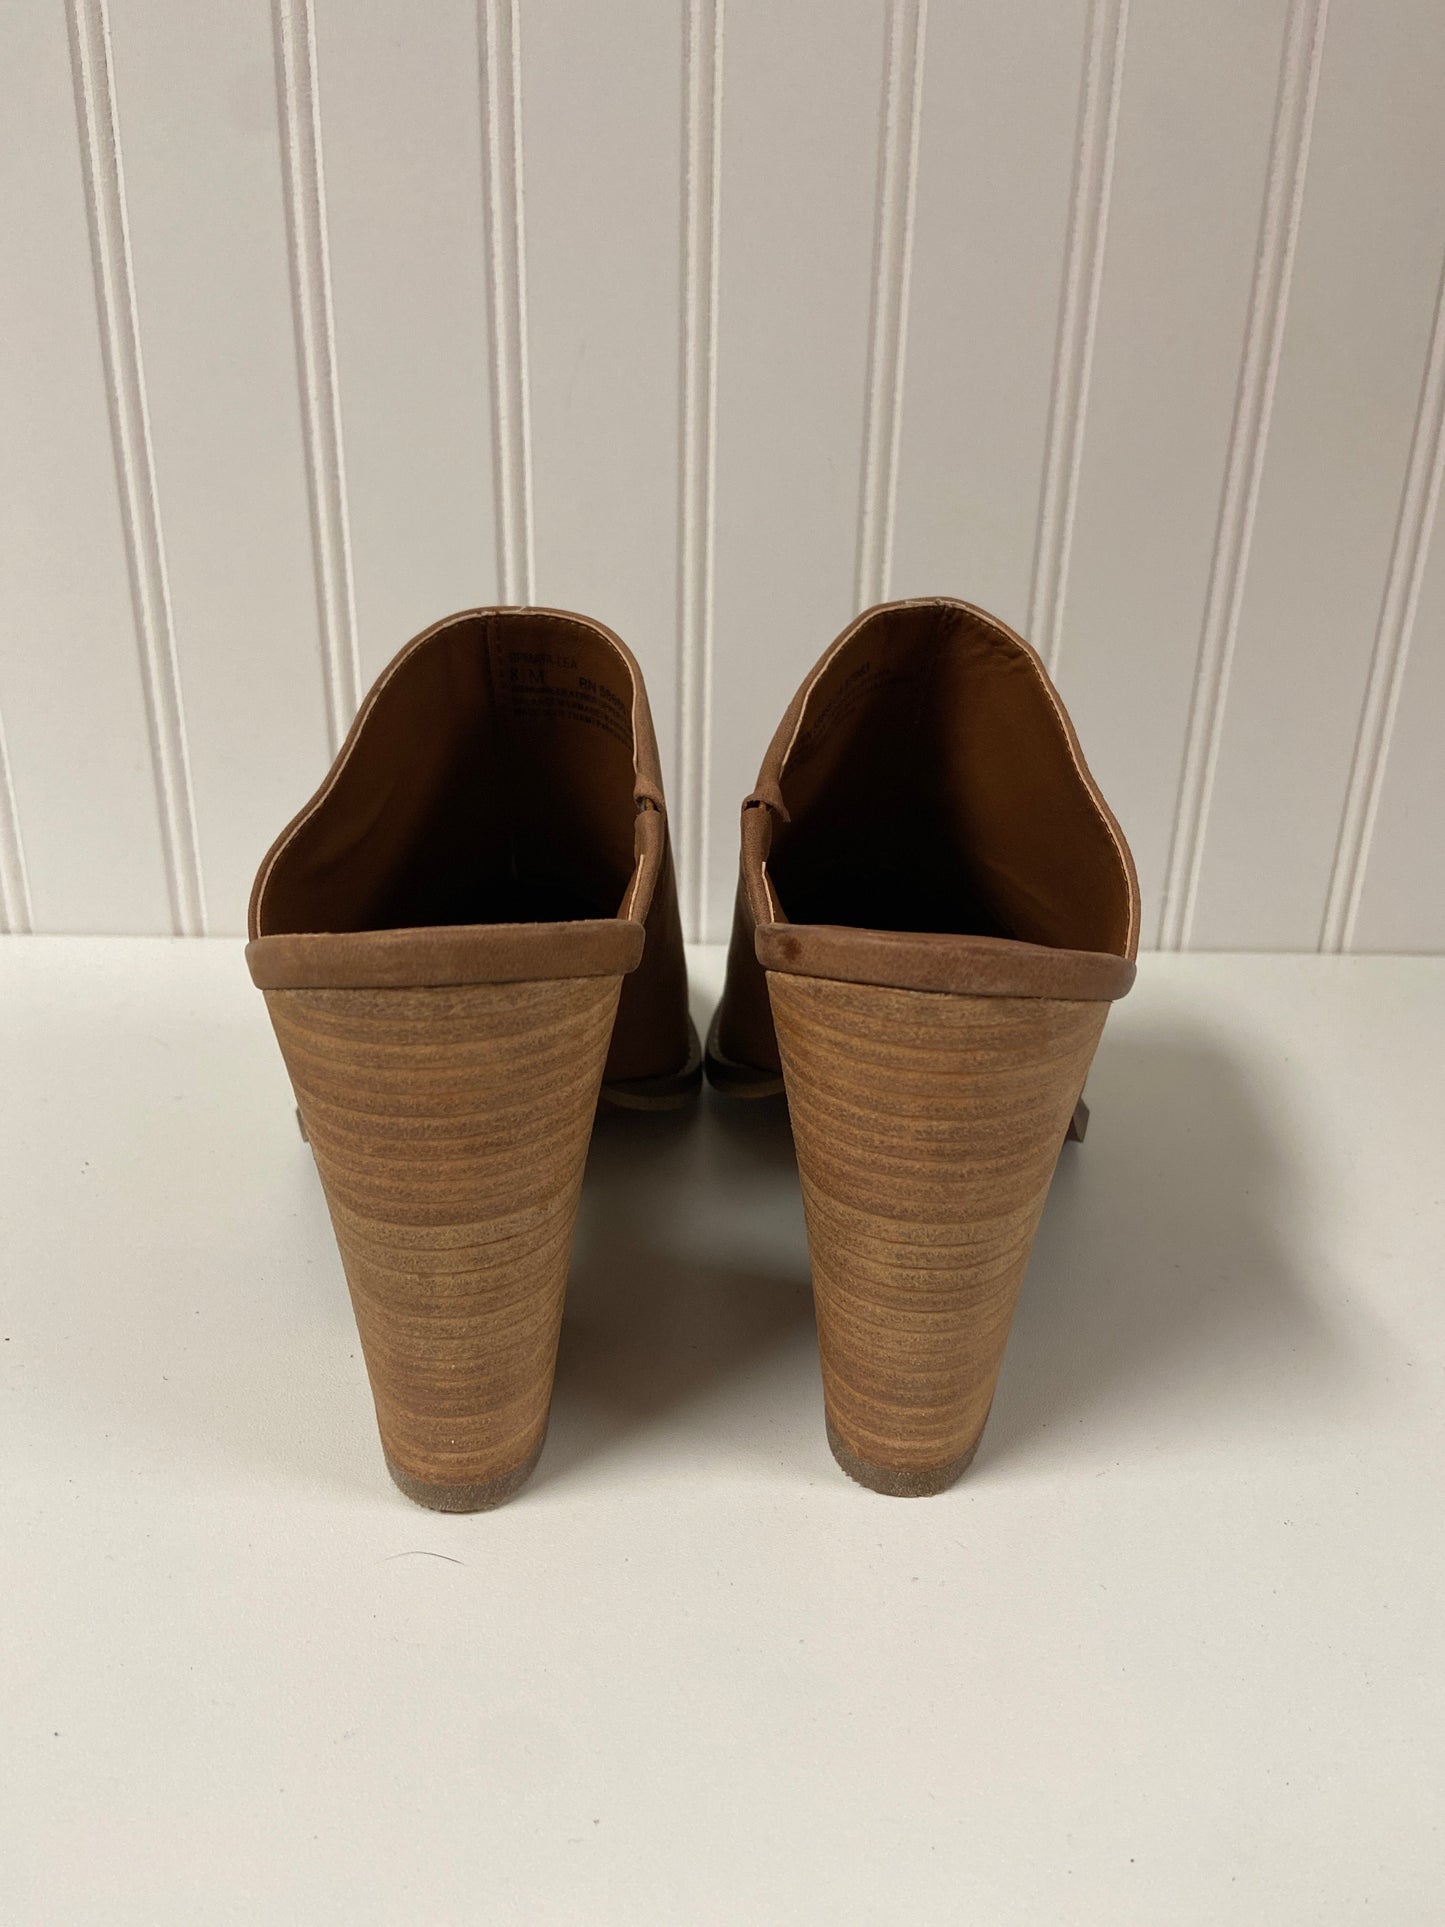 Brown Shoes Heels Block Bp, Size 8.5